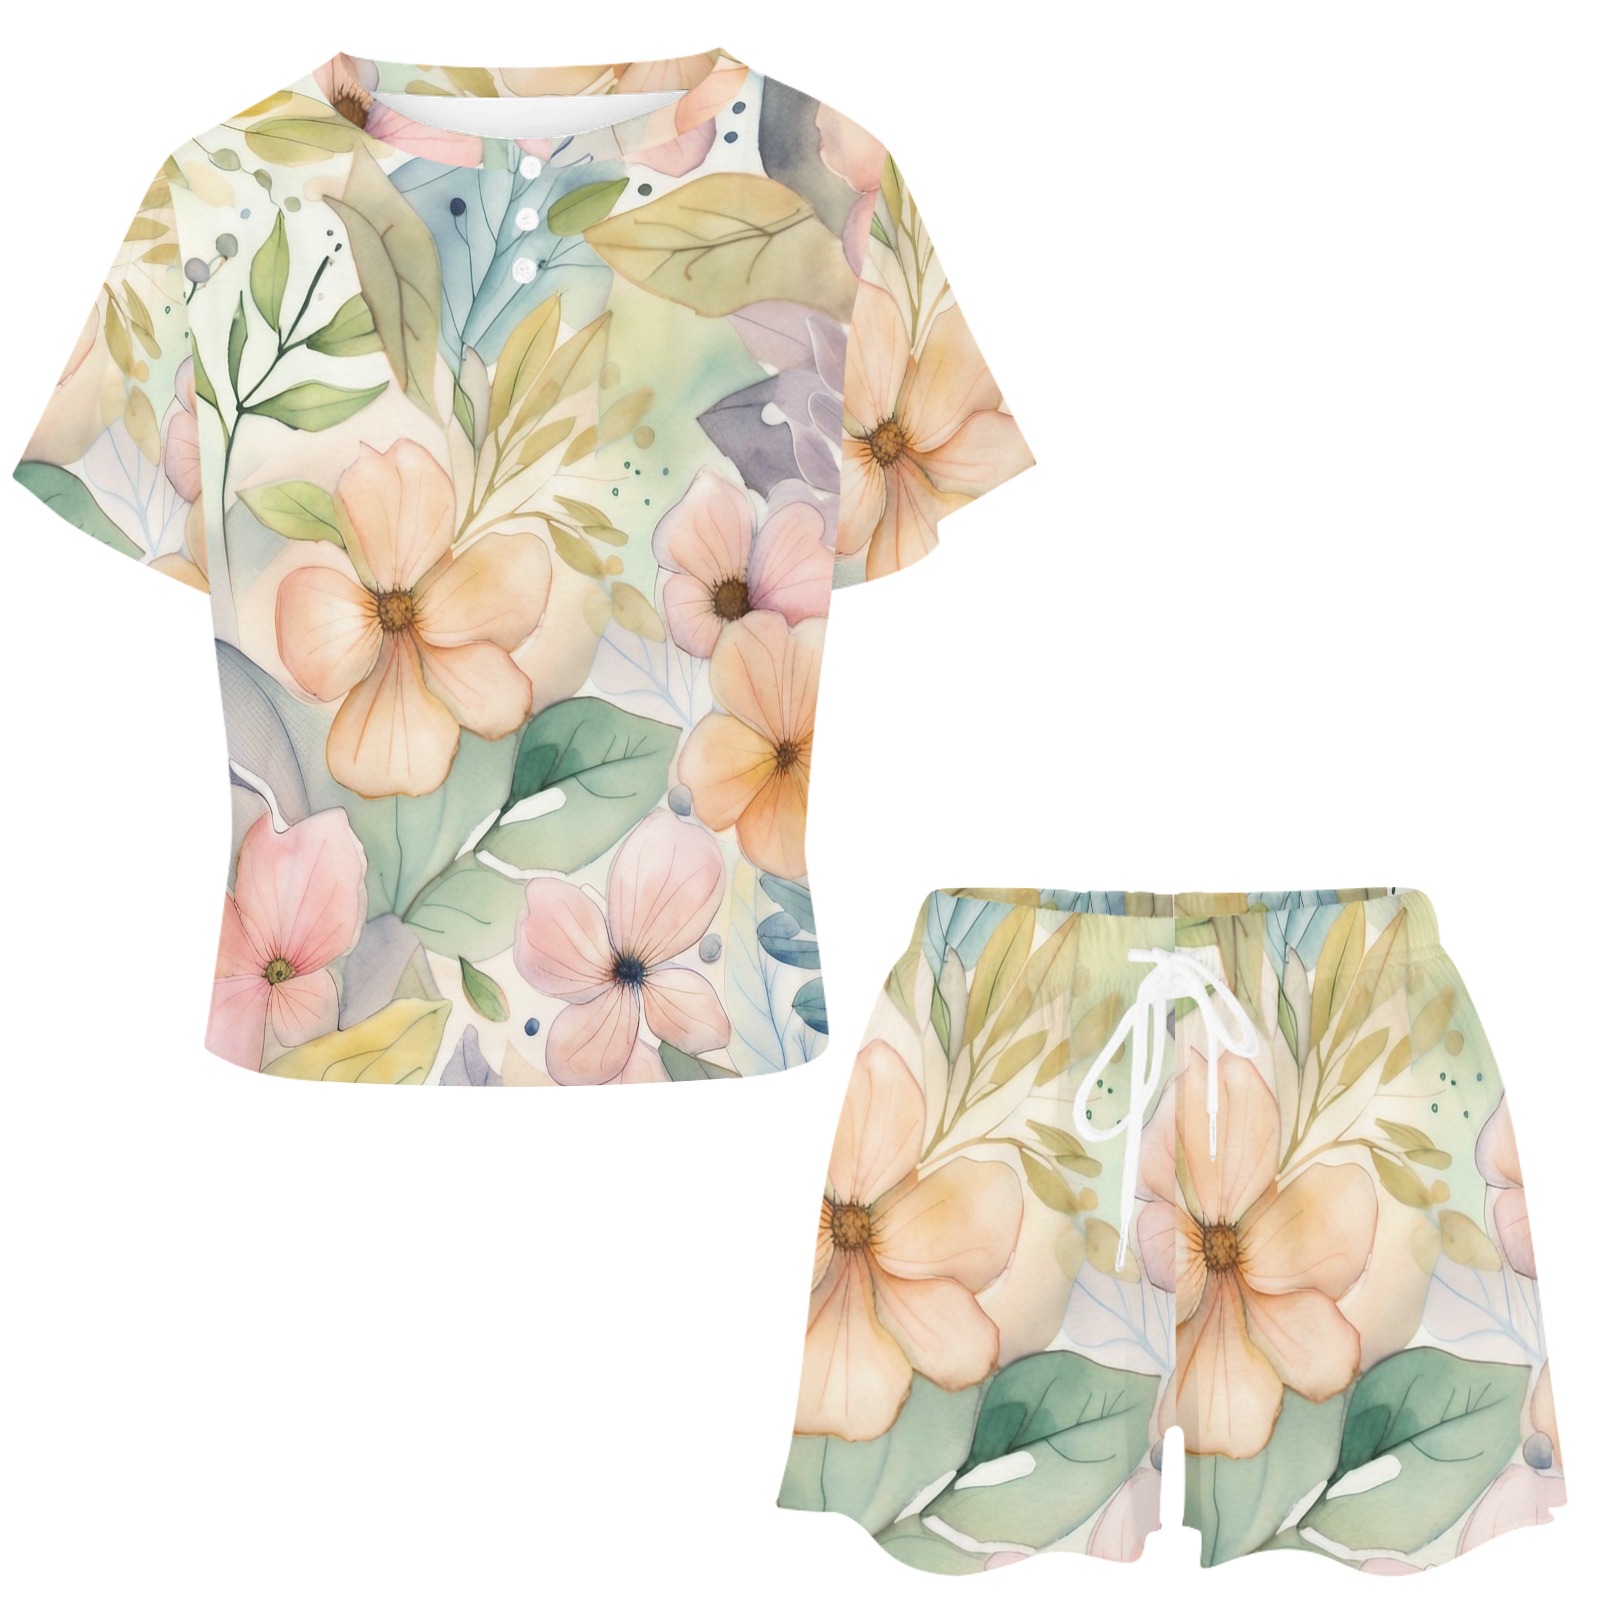 Watercolor Floral 1 Women's Mid-Length Shorts Pajama Set